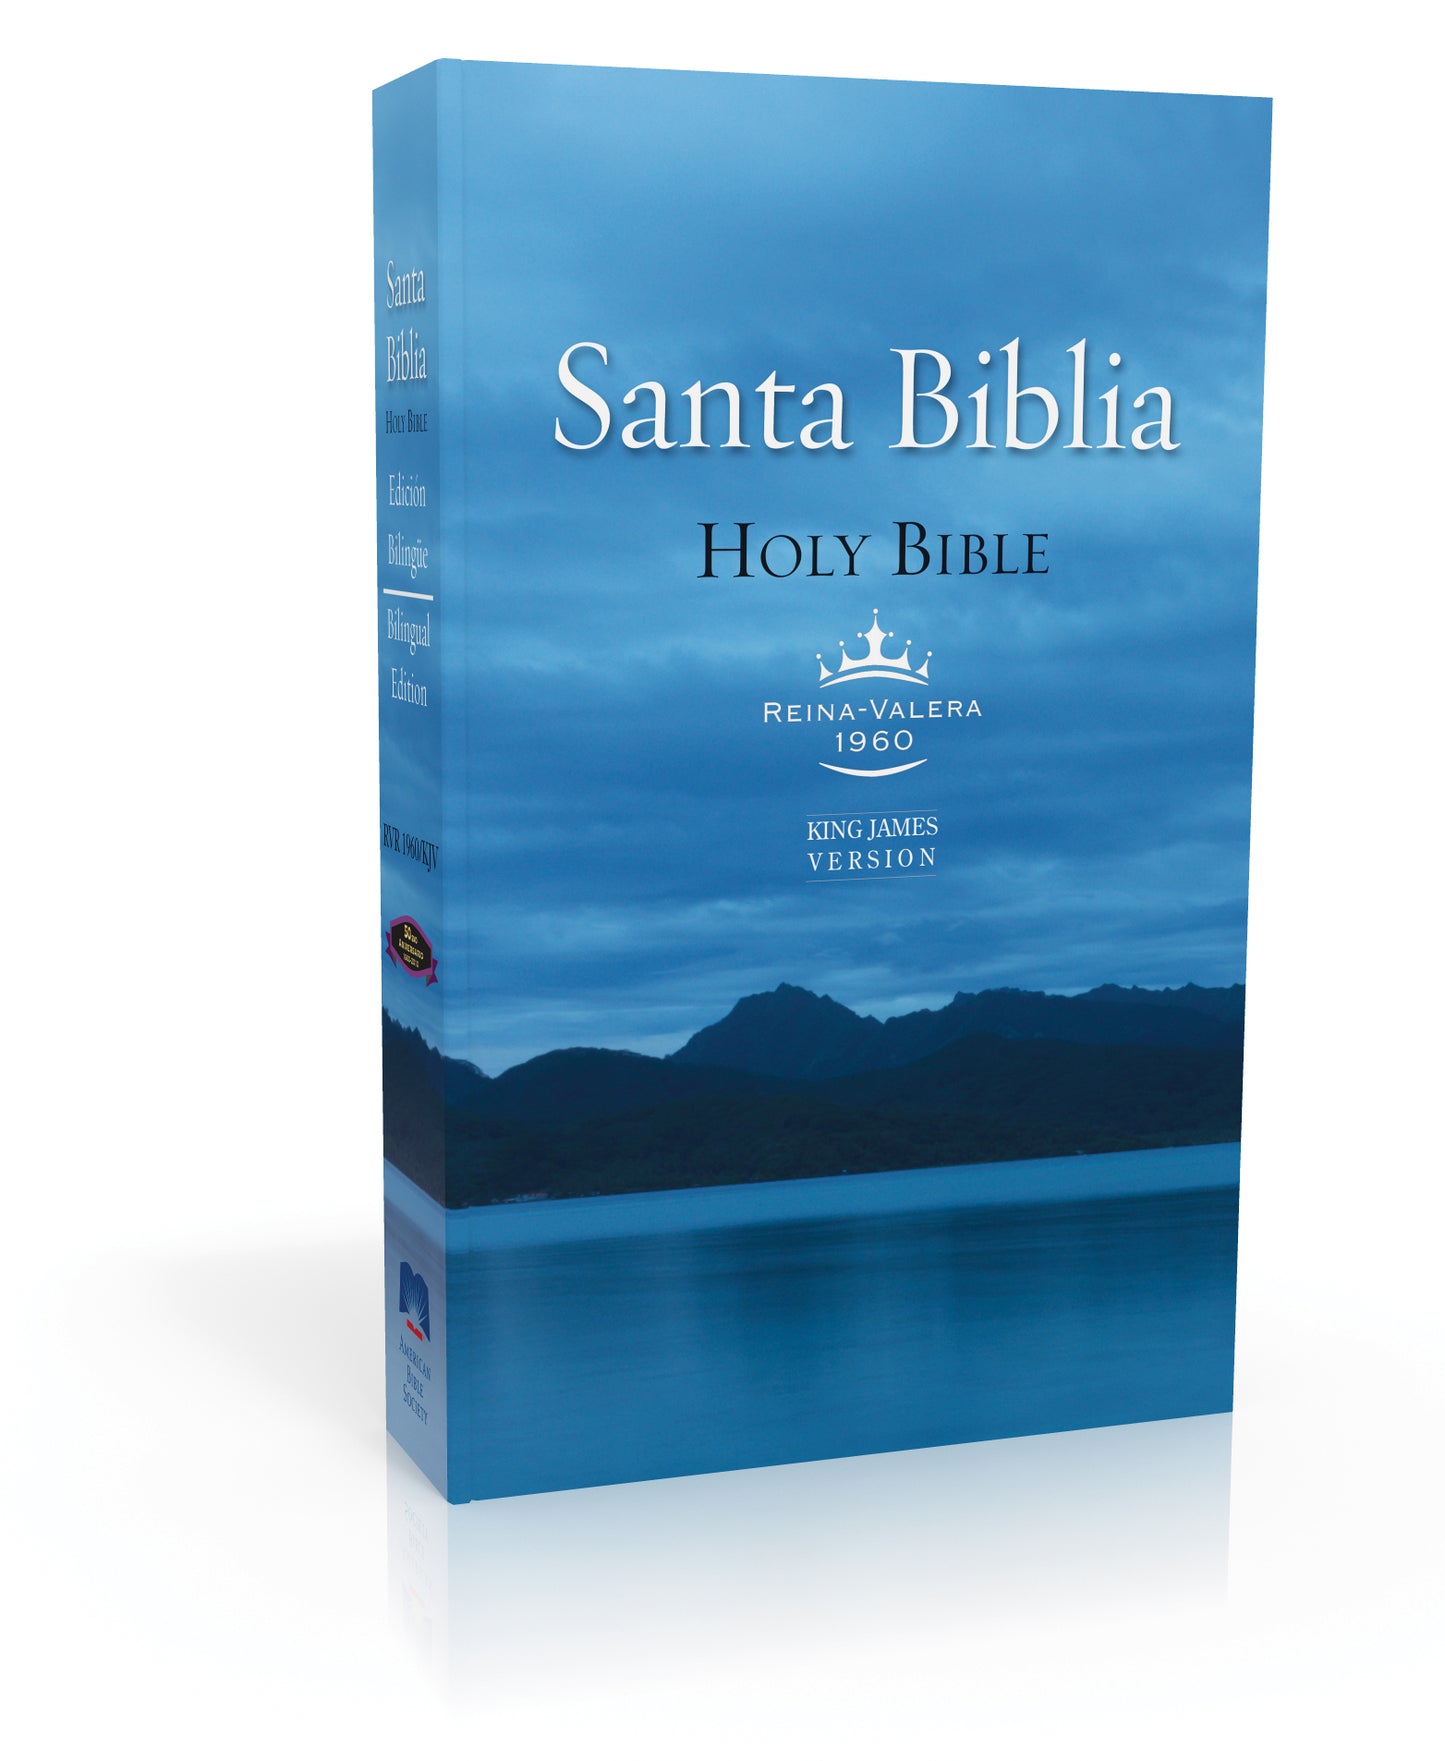 Bíblia bilíngue em espanhol RVR60/KJV